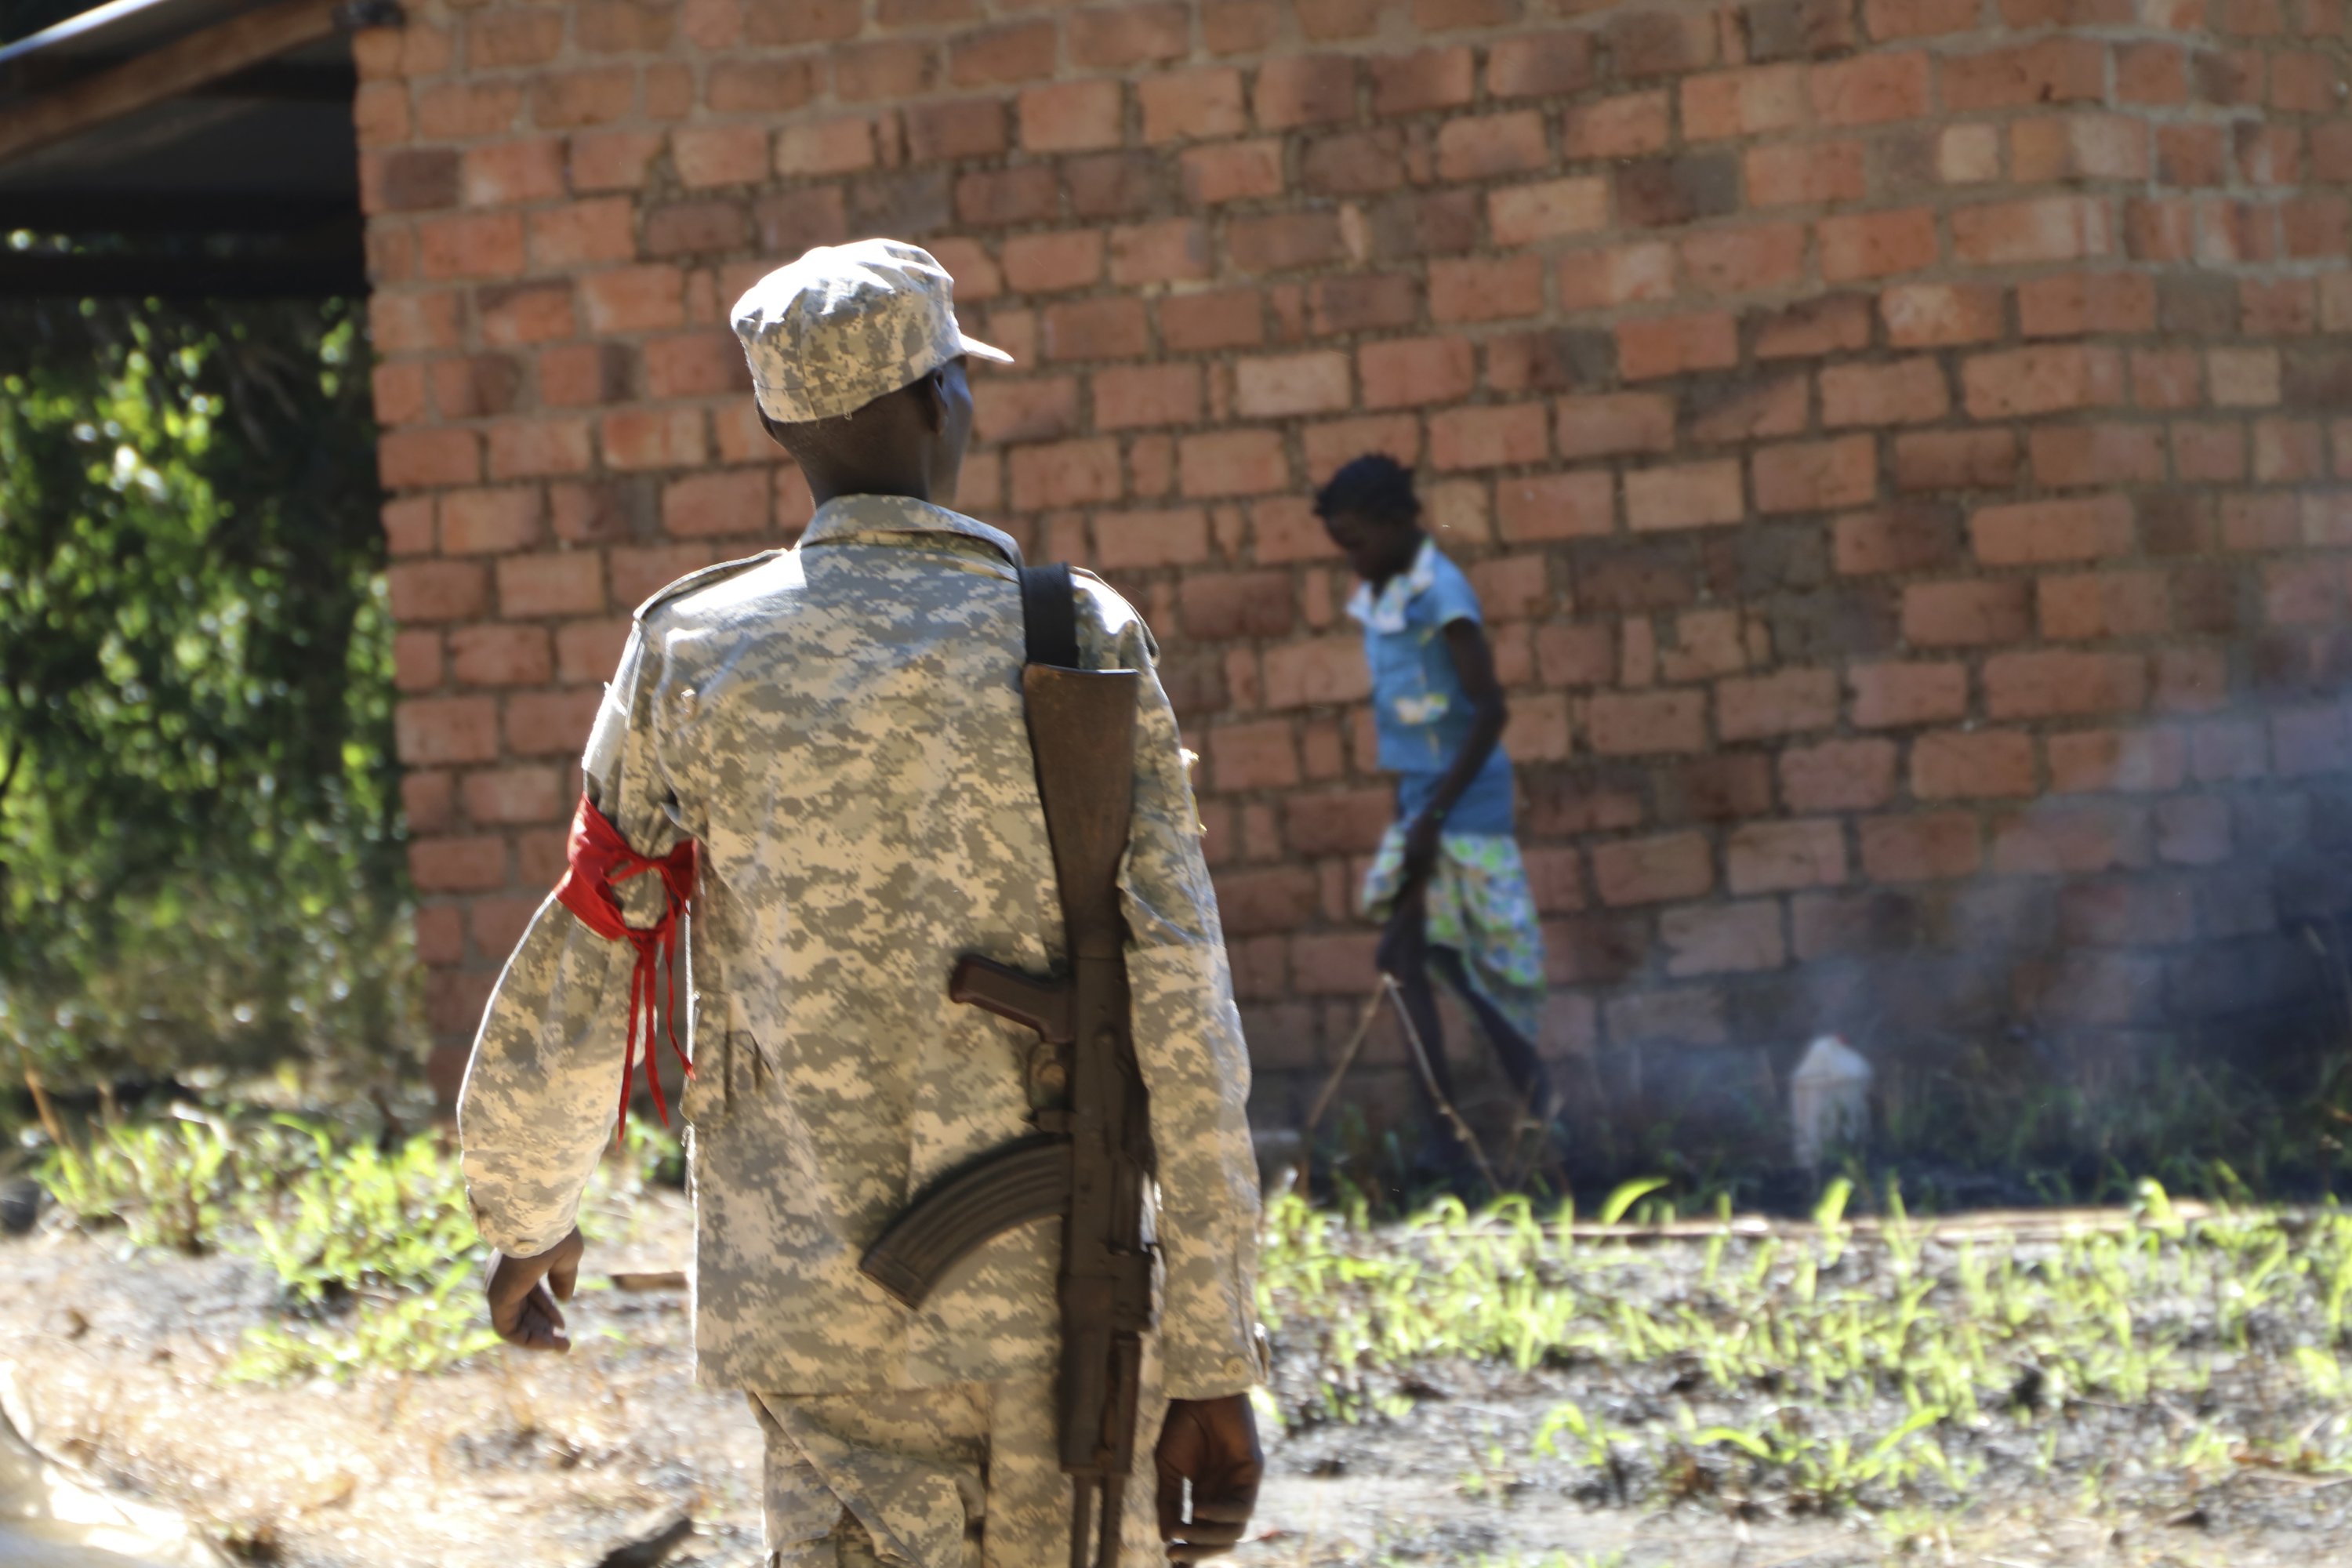 Rare conviction of South Sudan for rape raises hopes